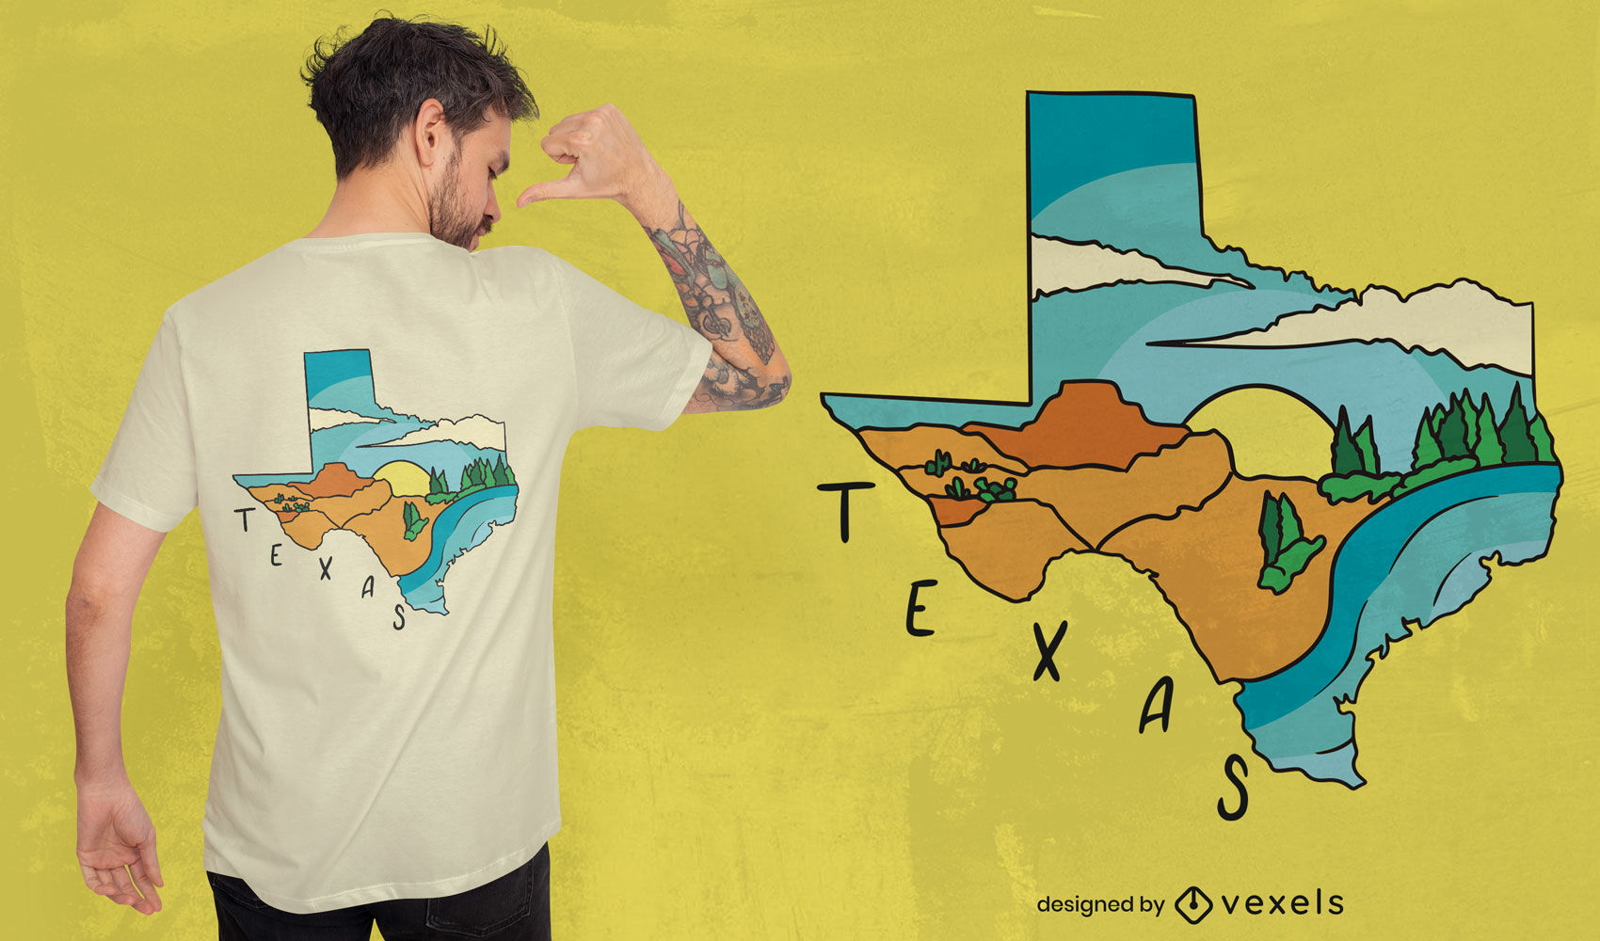 Dise?o de camiseta del mapa del paisaje del estado de Texas